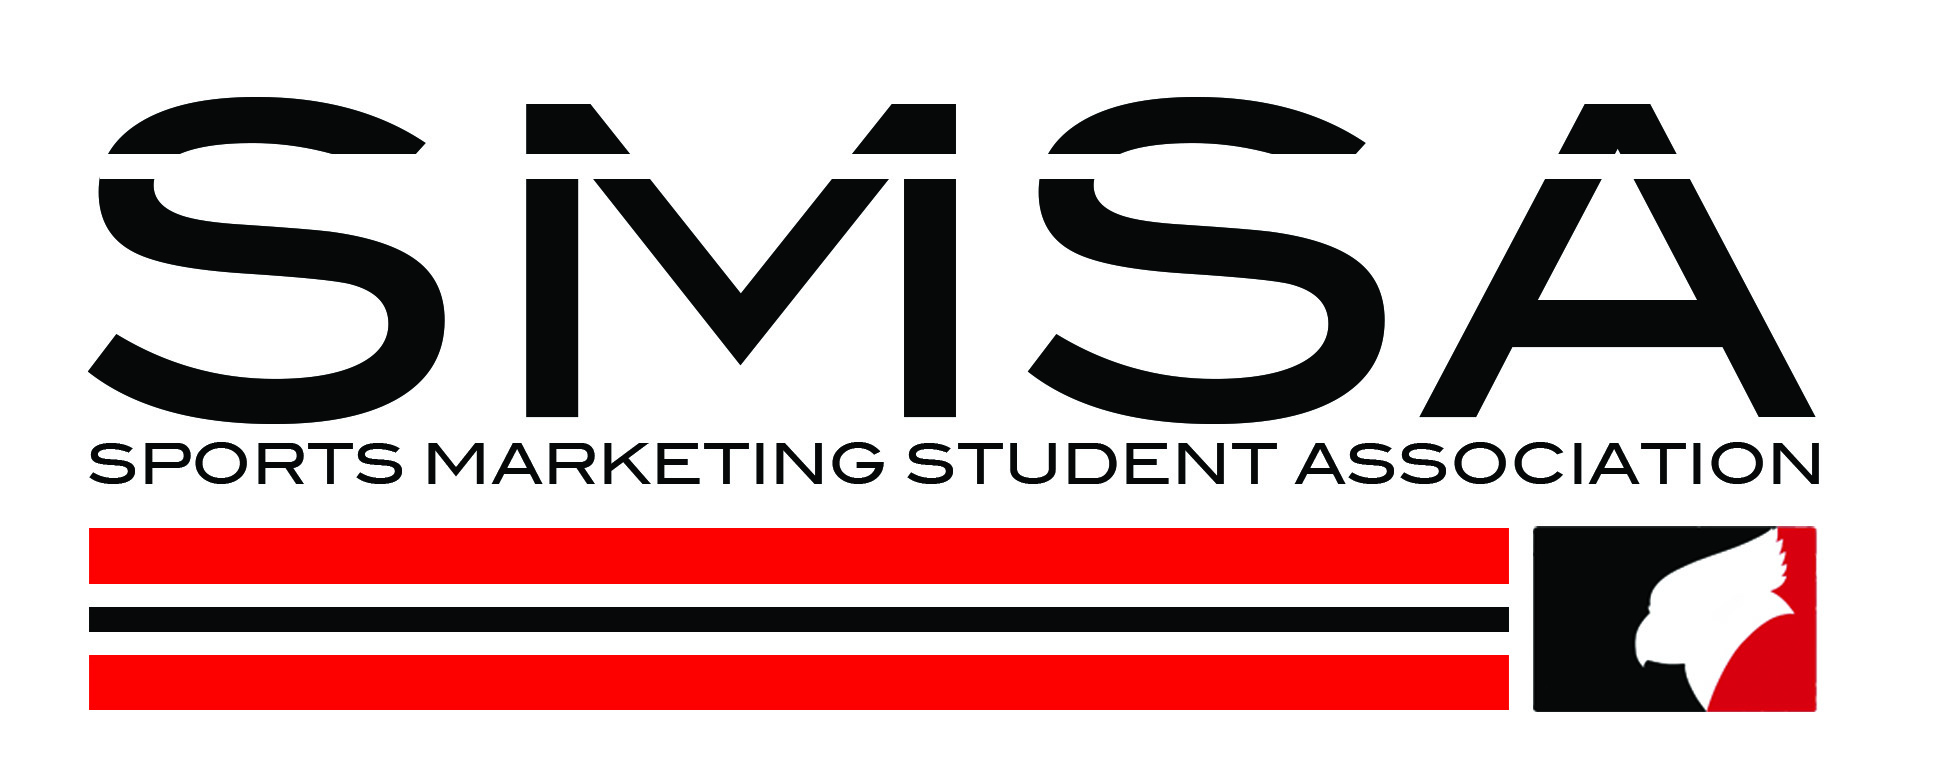 Sports Marketing Student Association Logo